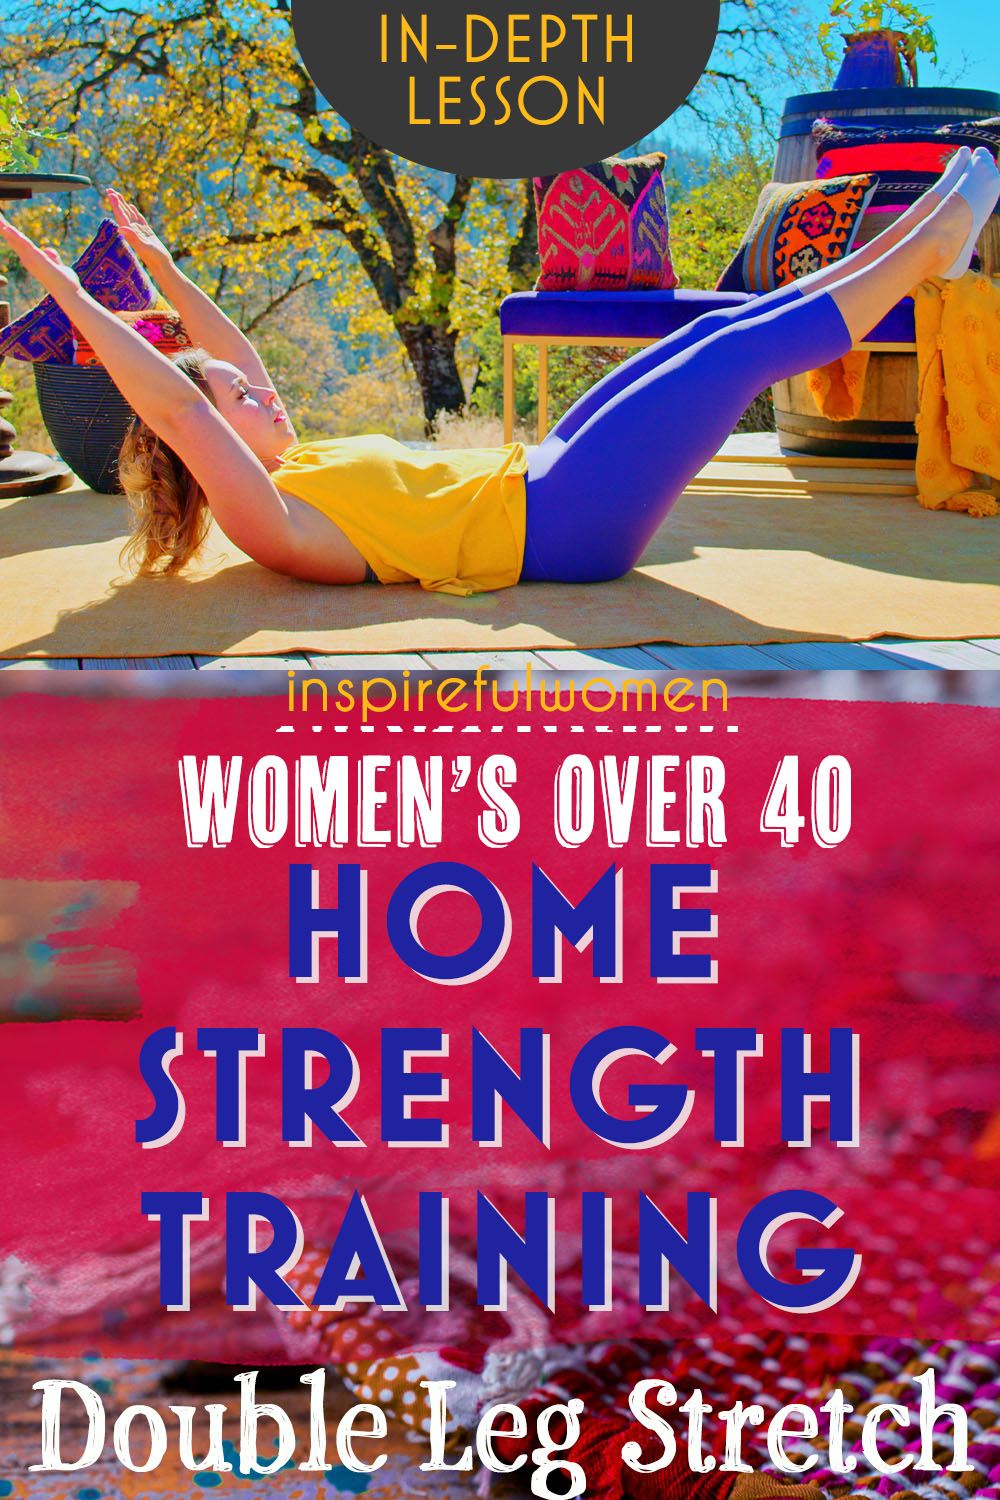 double-leg-stretch-pilates-core-exercise-neutral-spine-proper-form-women-40+